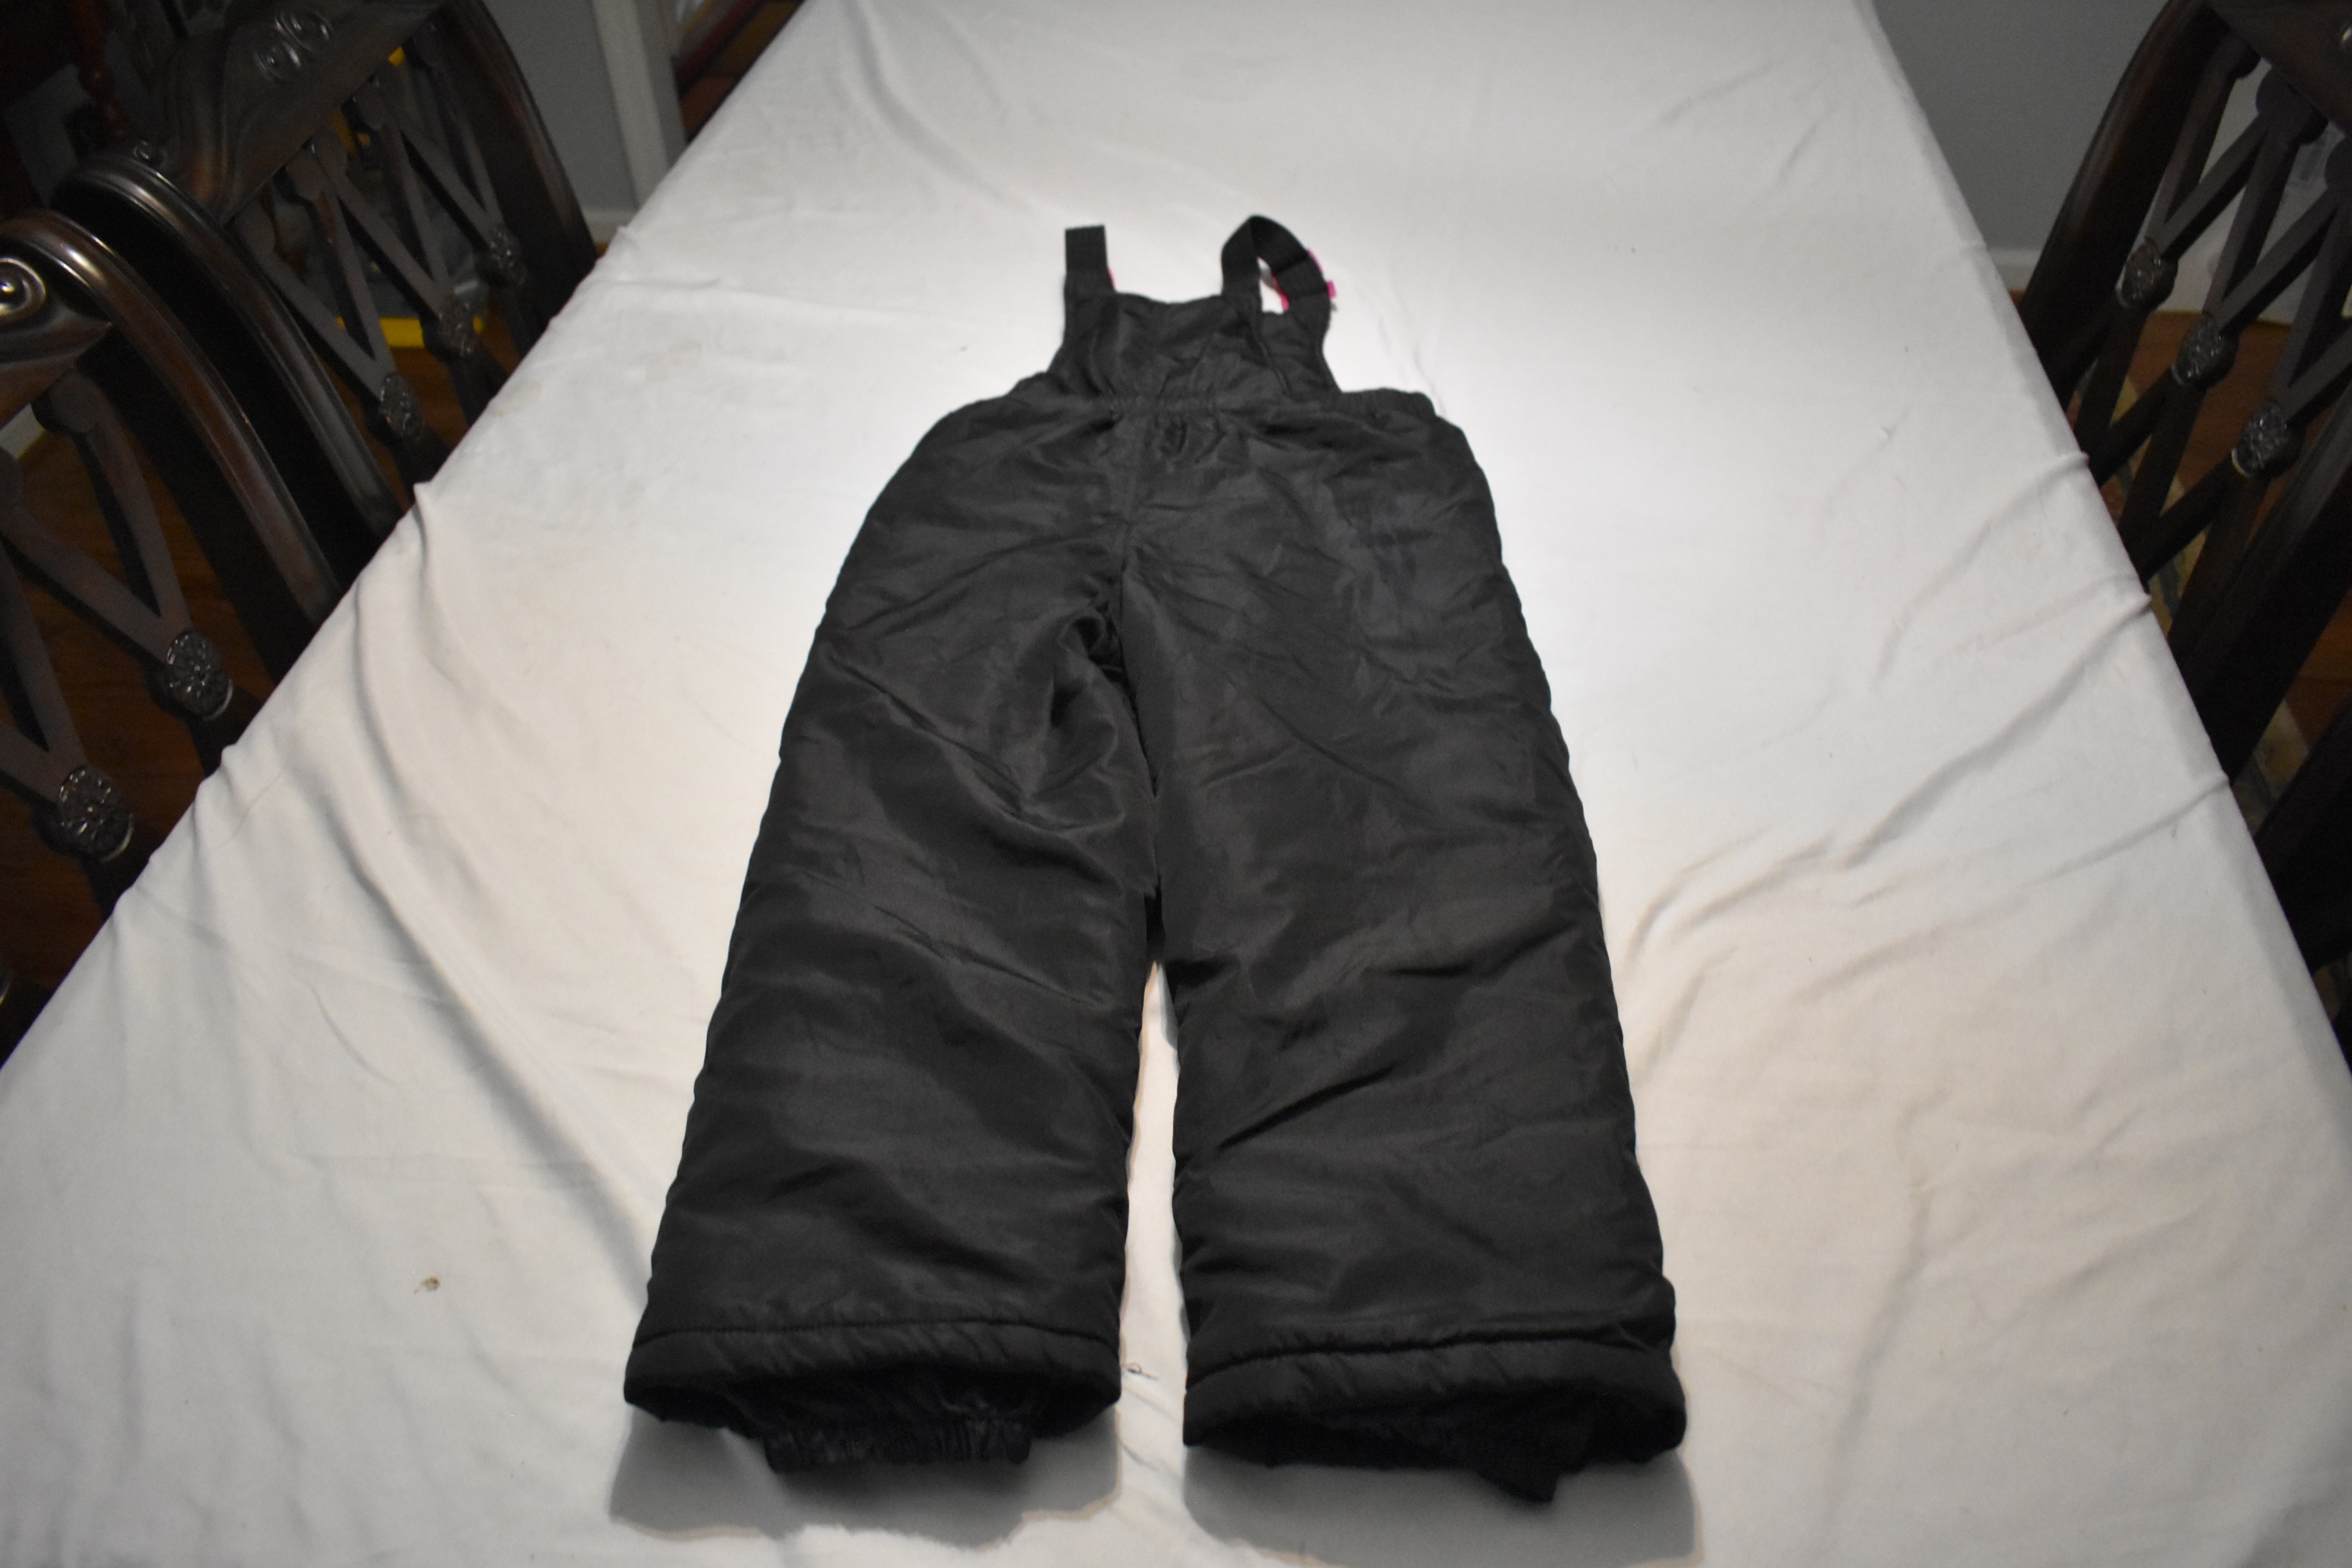 Rawik Winter Sports Ski Pants/Bib, Black, Size 5